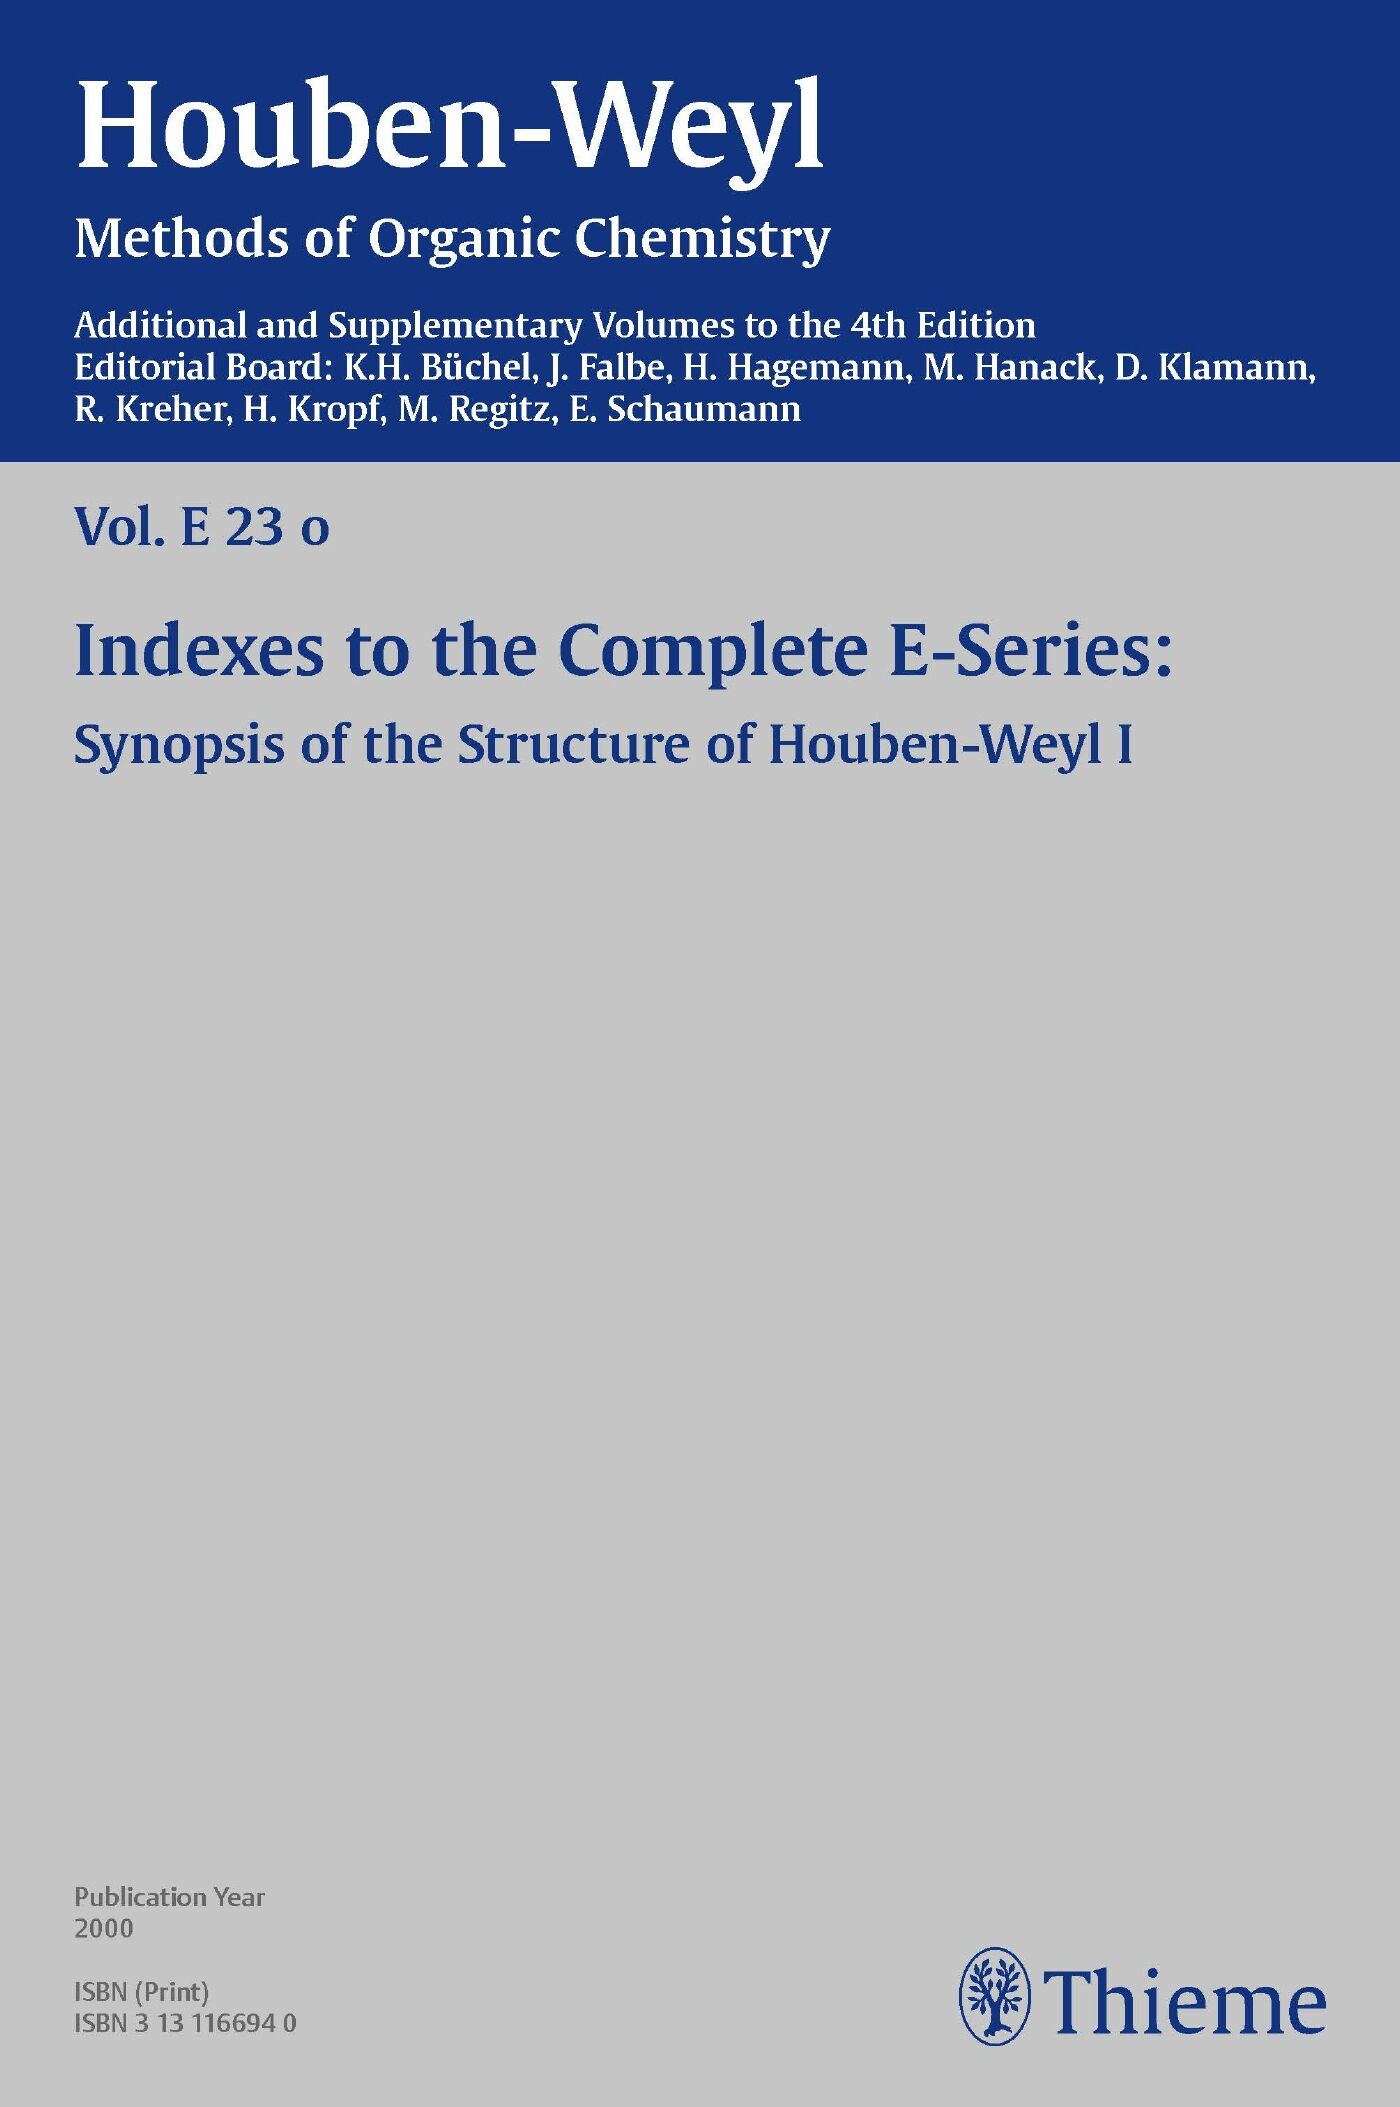 Houben-Weyl Methods of Organic Chemistry Vol. E 23o, 4th Edition Supplement, 9783131827647